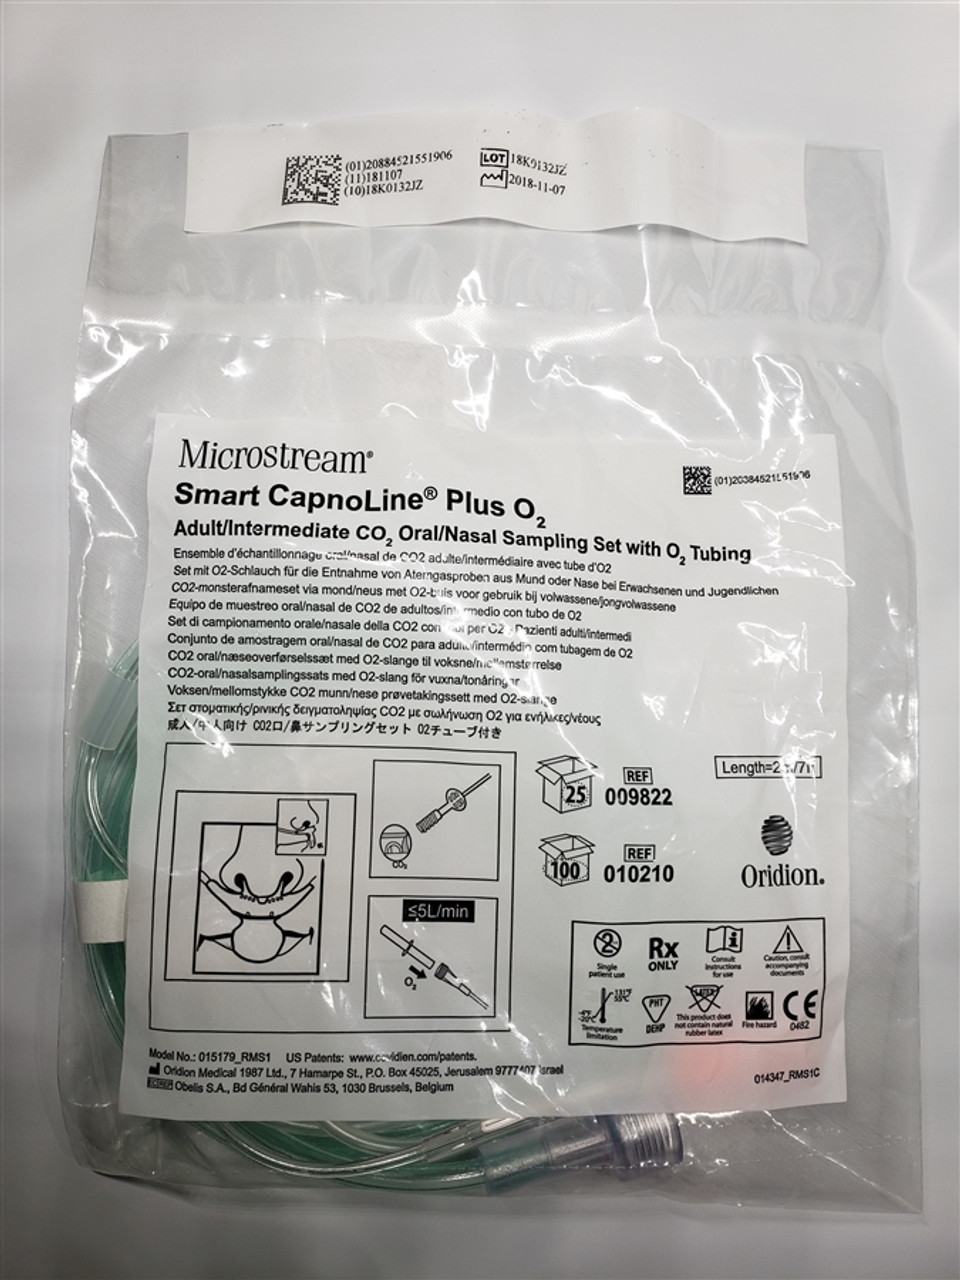 Microstream Smart Capnoline Plus O2